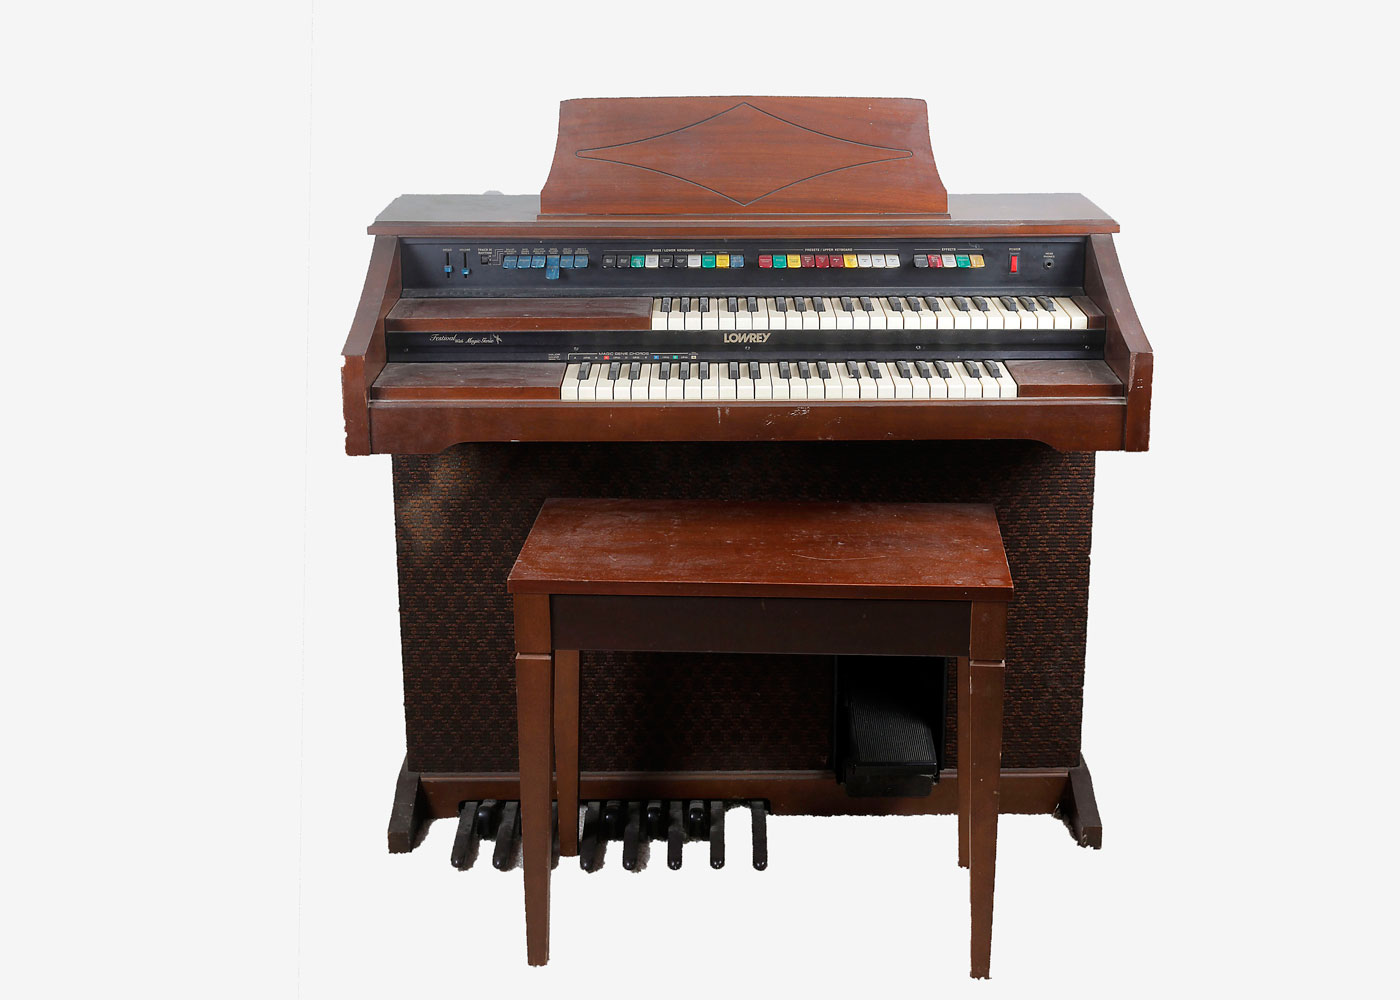 lowrey organ harpsichord